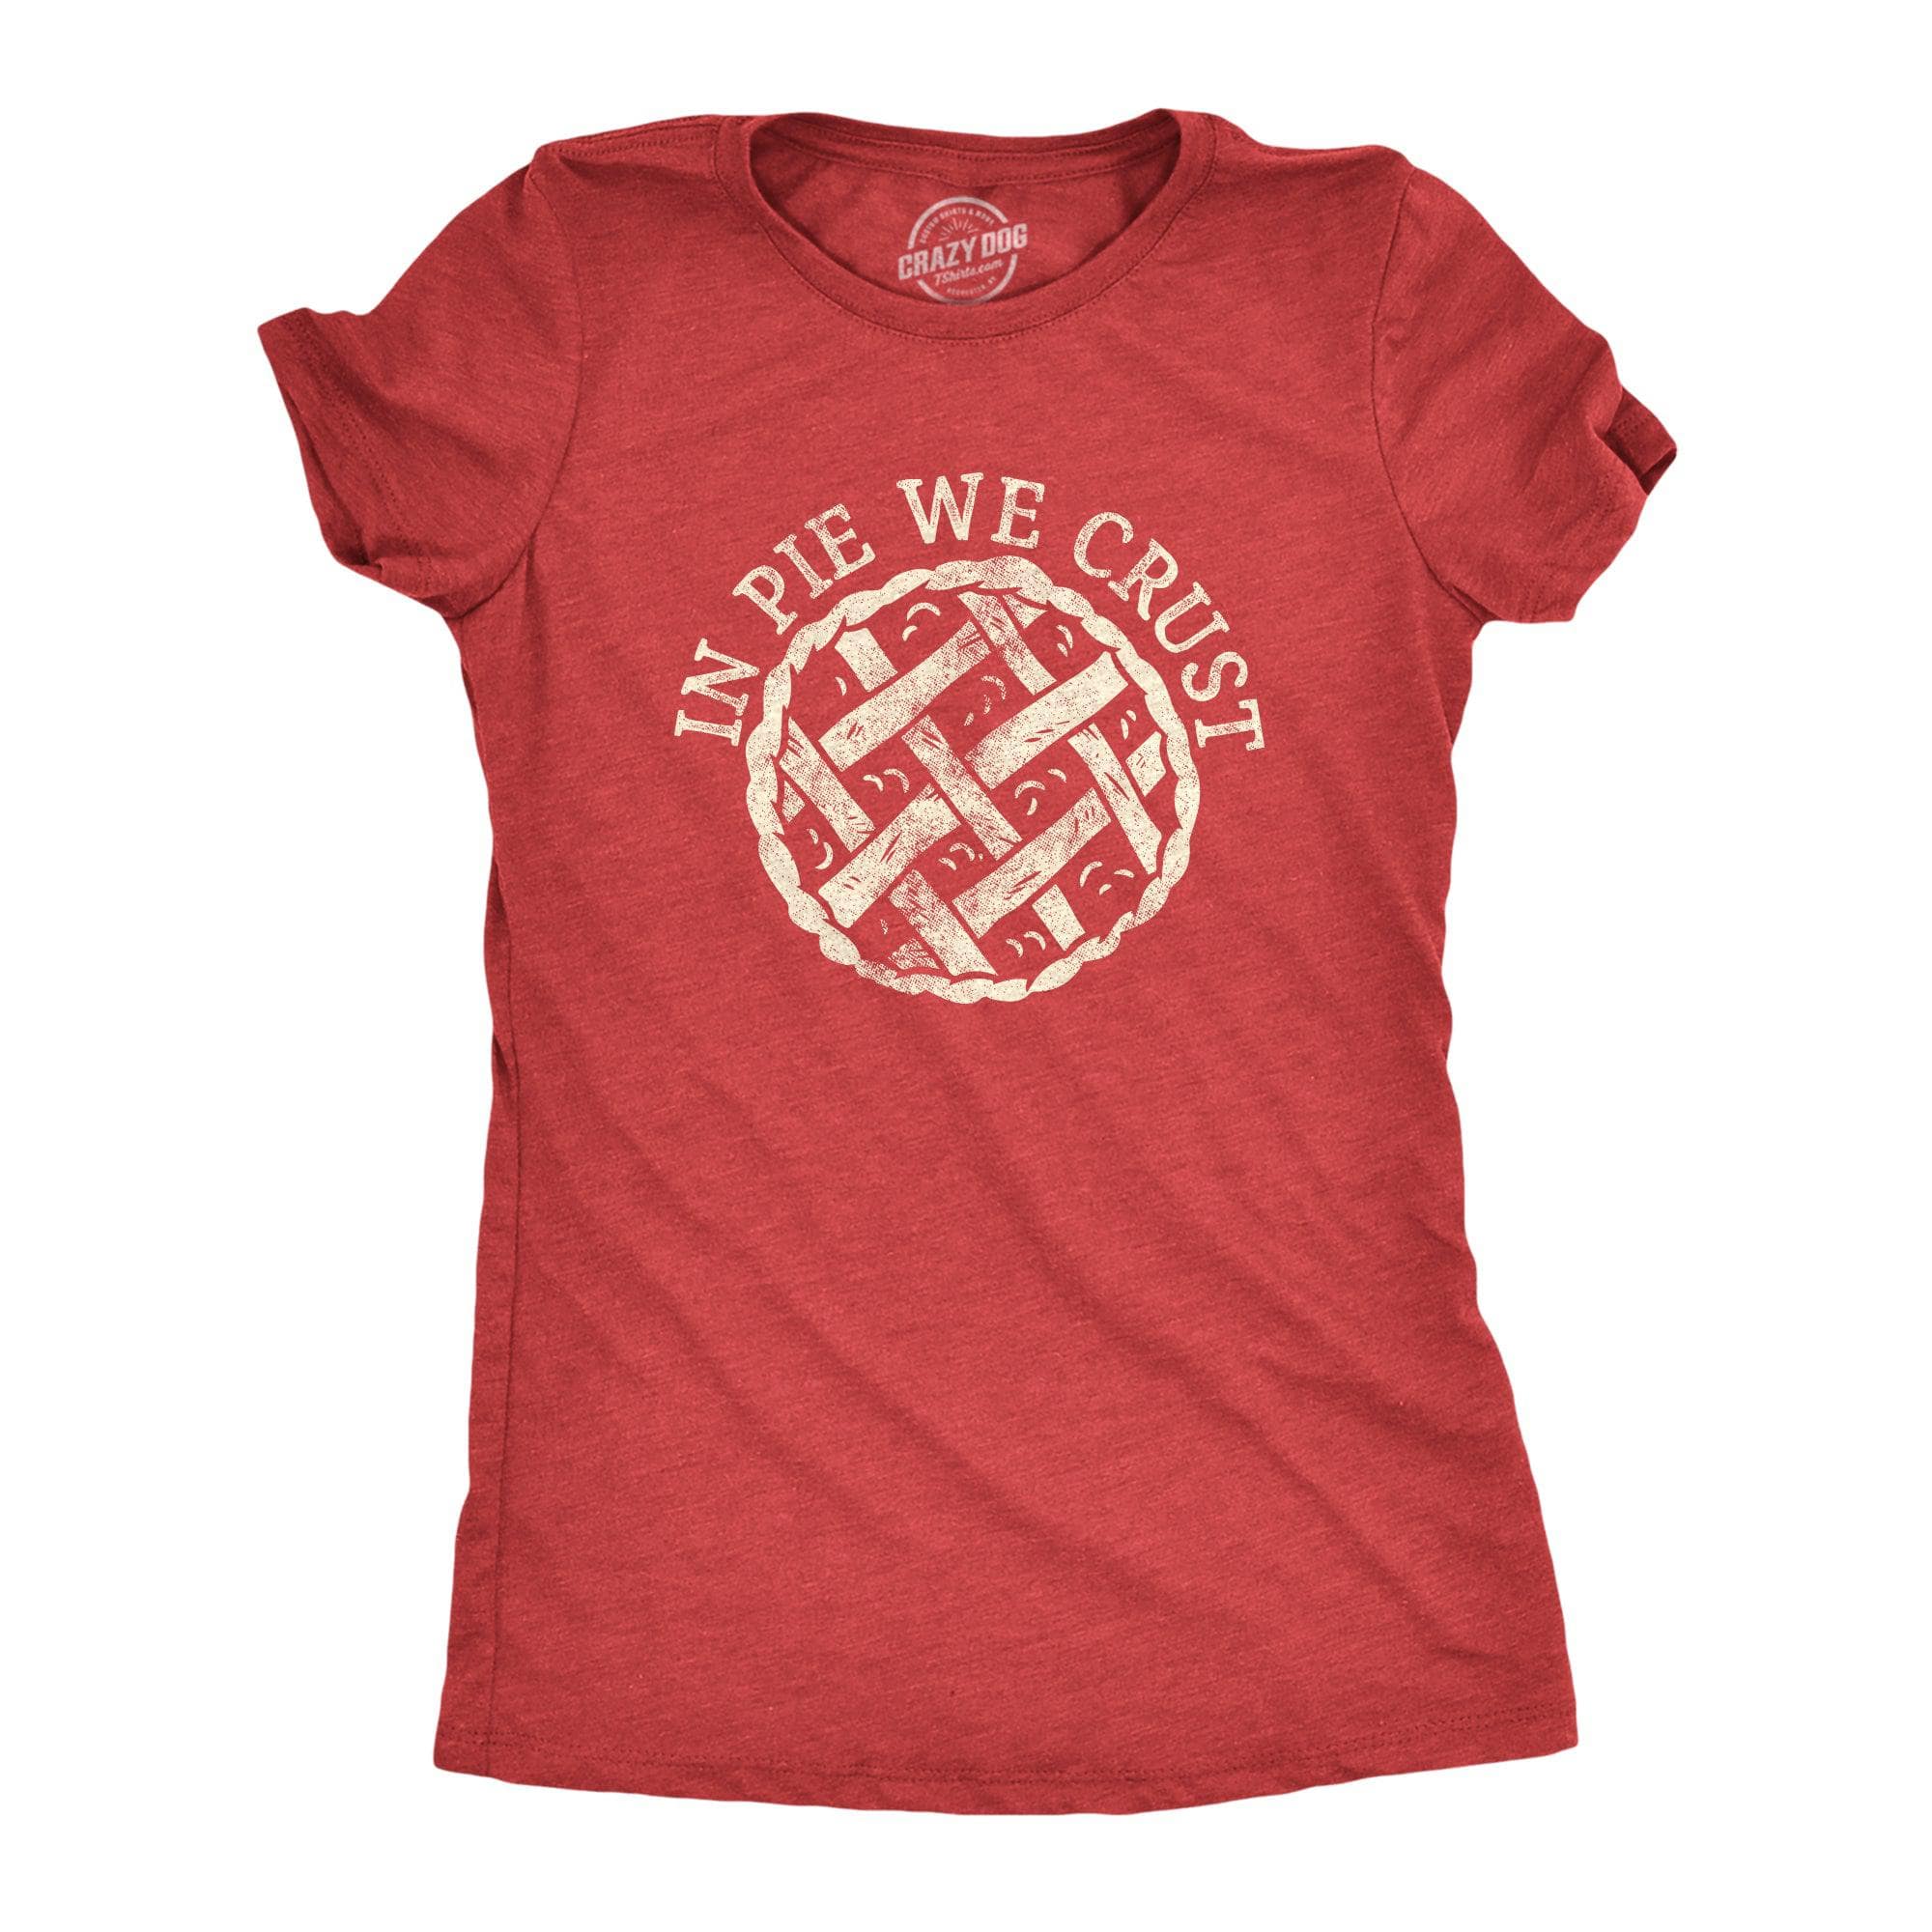 In Pie We Crust Women's Tshirt  -  Crazy Dog T-Shirts